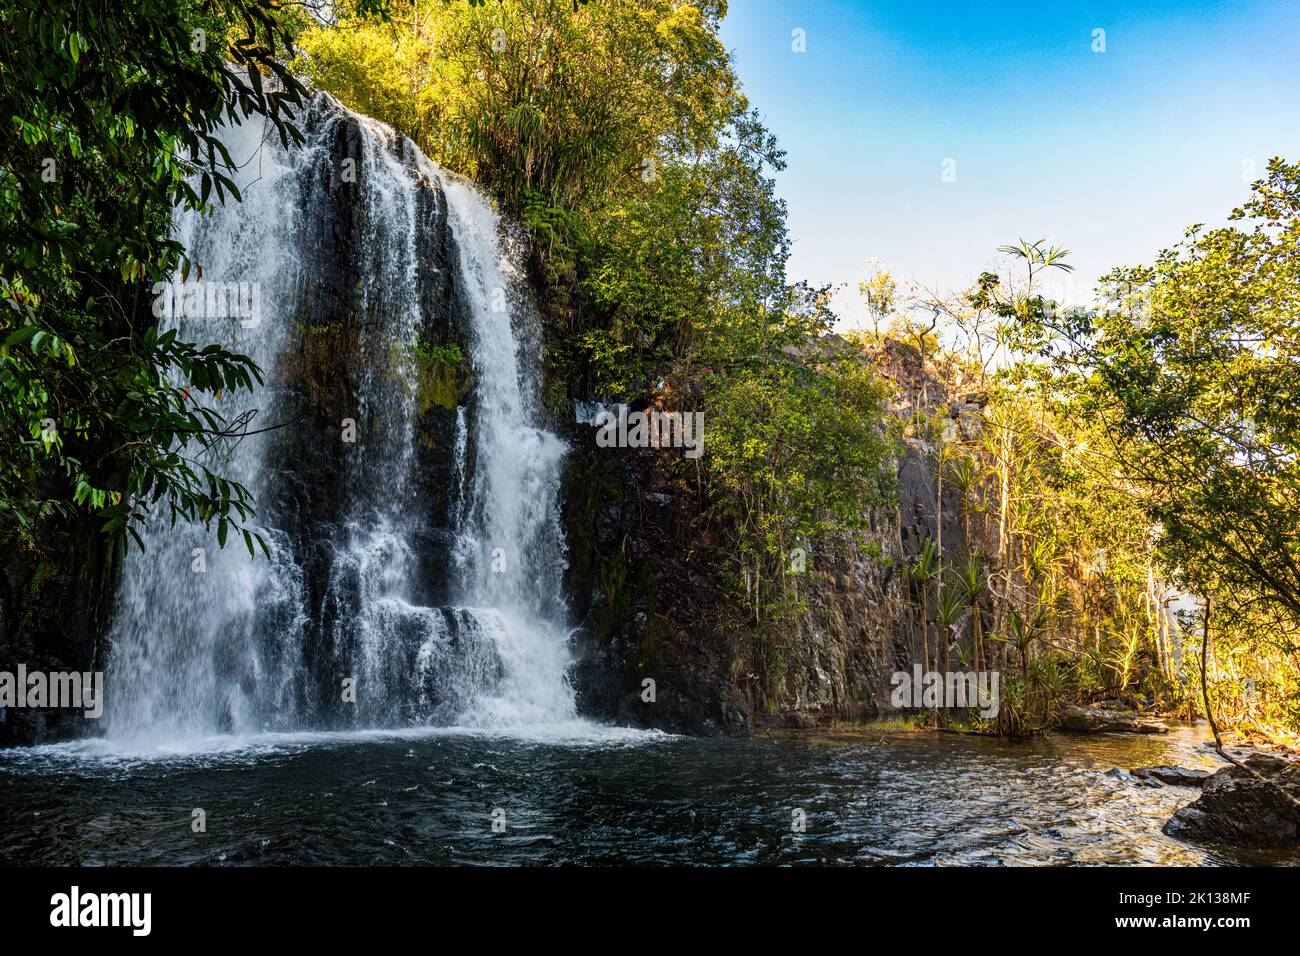 Ntumba Chushi Falls (Ntumbachushi Falls) am Ngona River, Nord-Sambia, Afrika Stockfoto